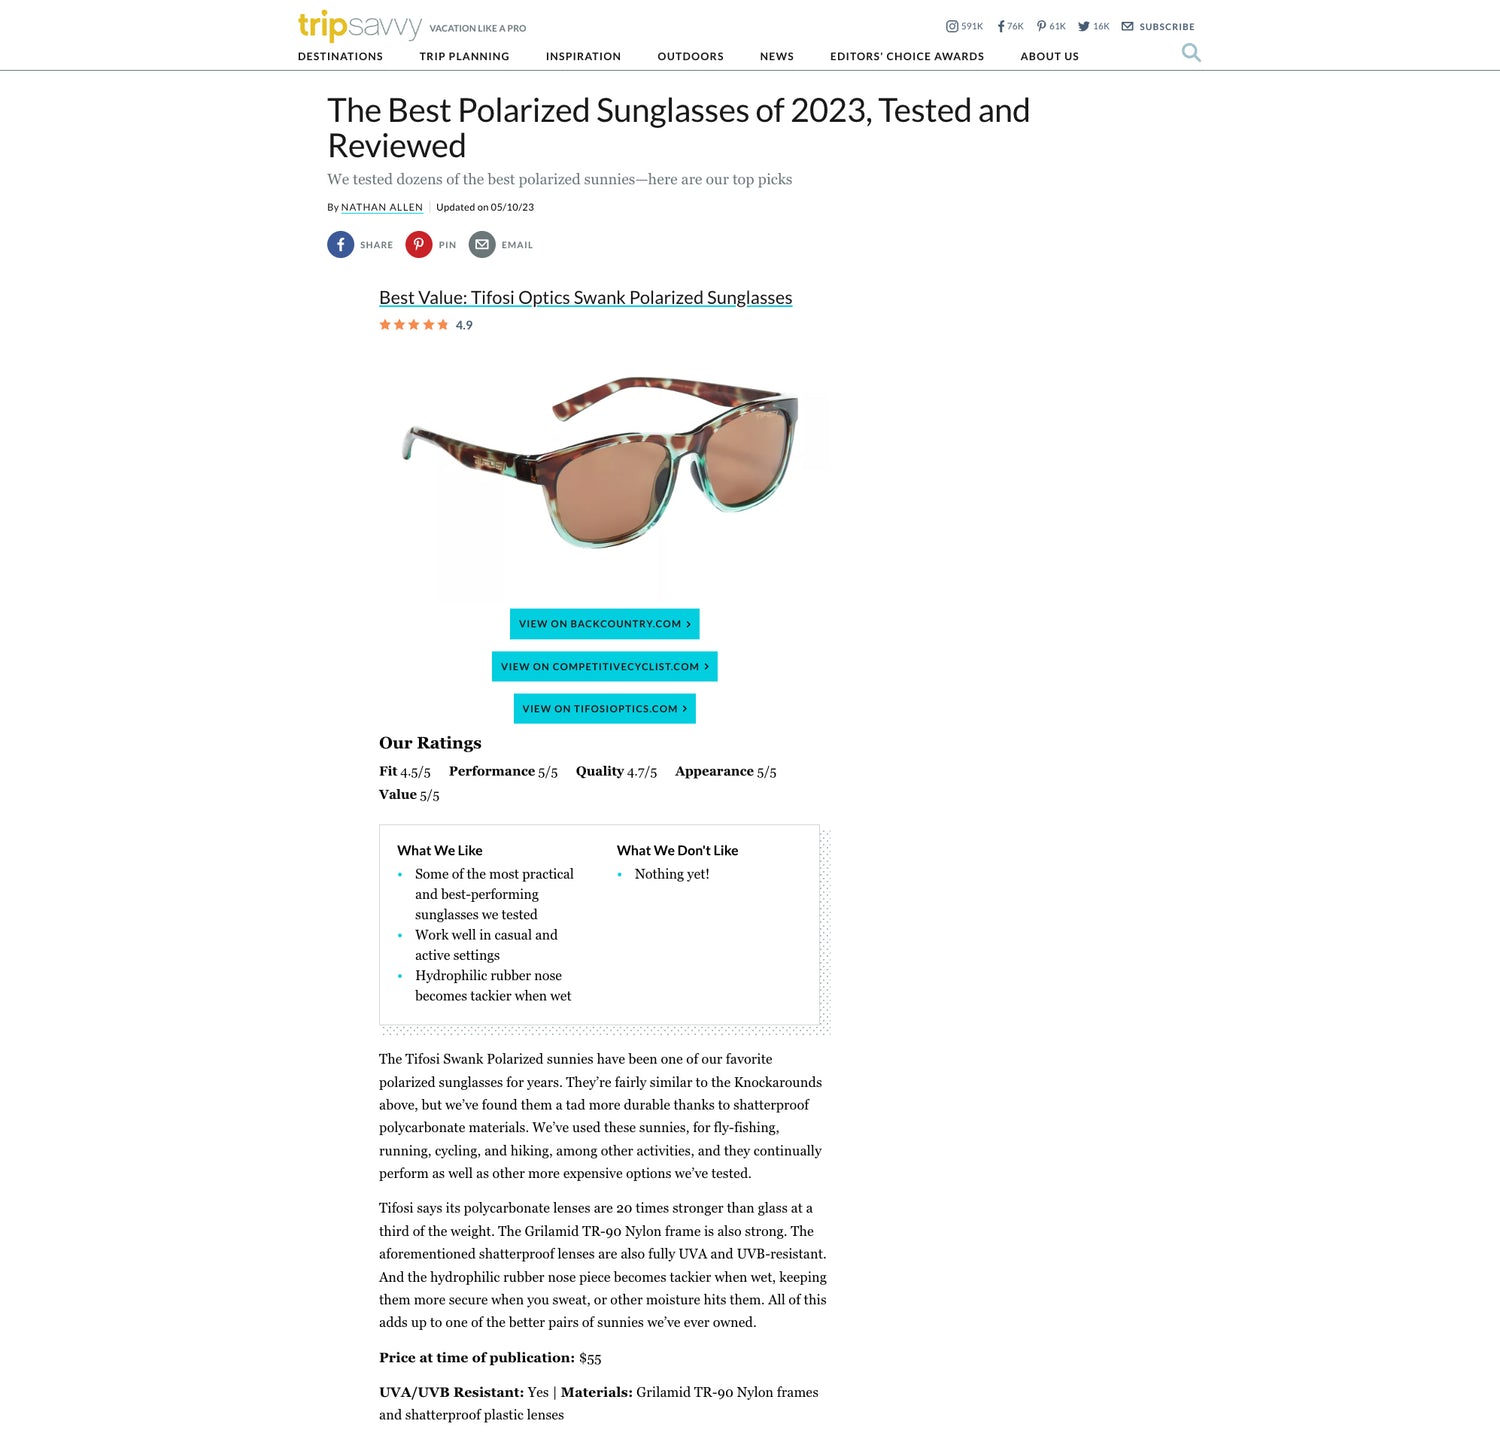 Best Polarized Sunglasses of 2023 - Tripsavvy May 2023